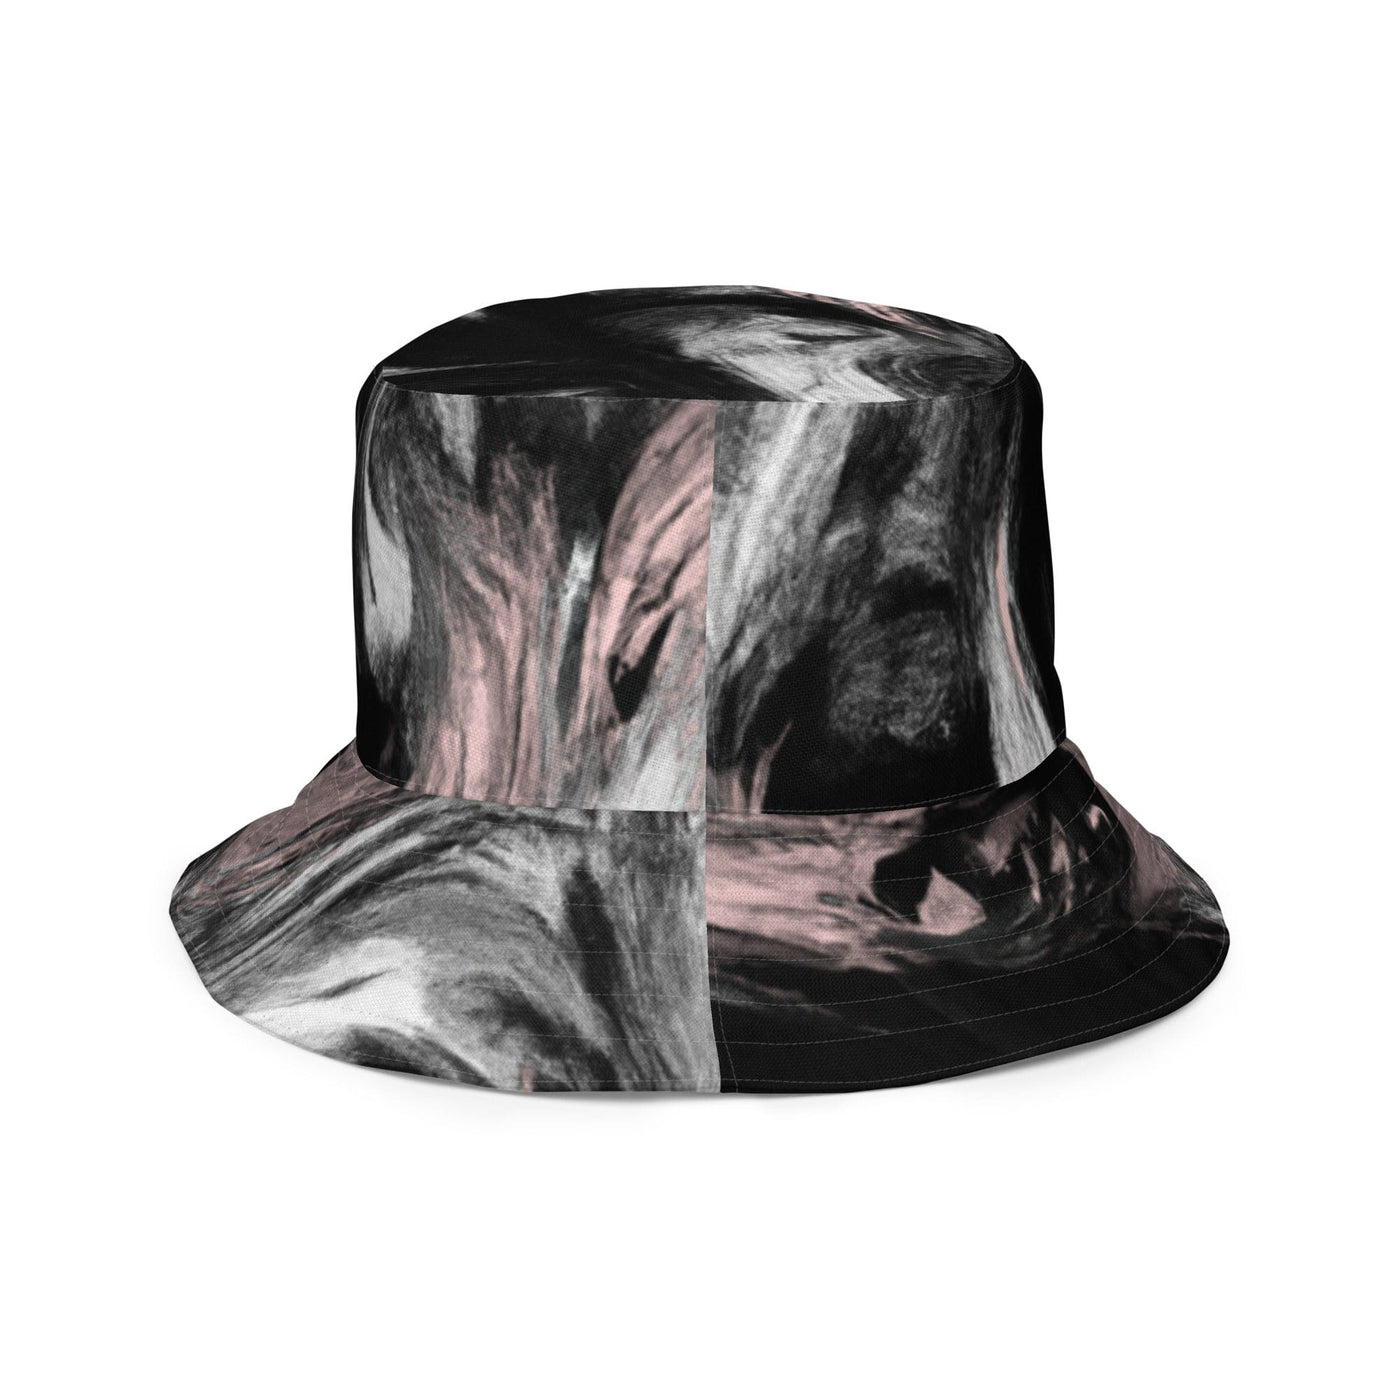 Reversible Bucket Hat Black Pink White Abstract Pattern - Unisex / Bucket Hats